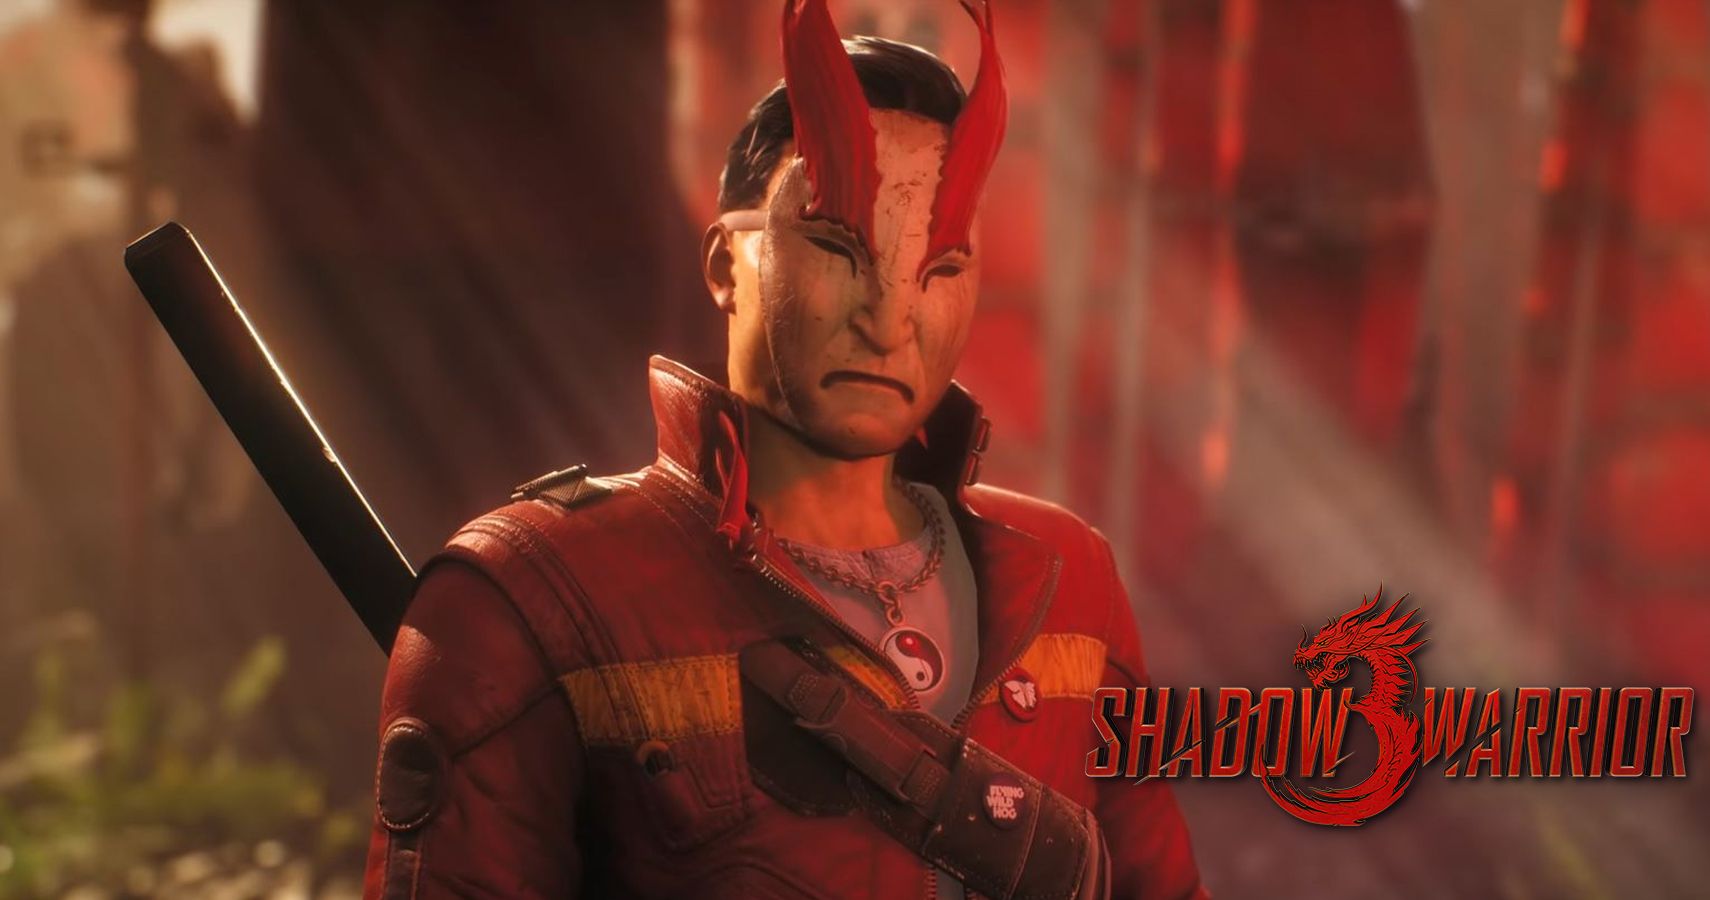 download shadow warrior 3 xbox series x